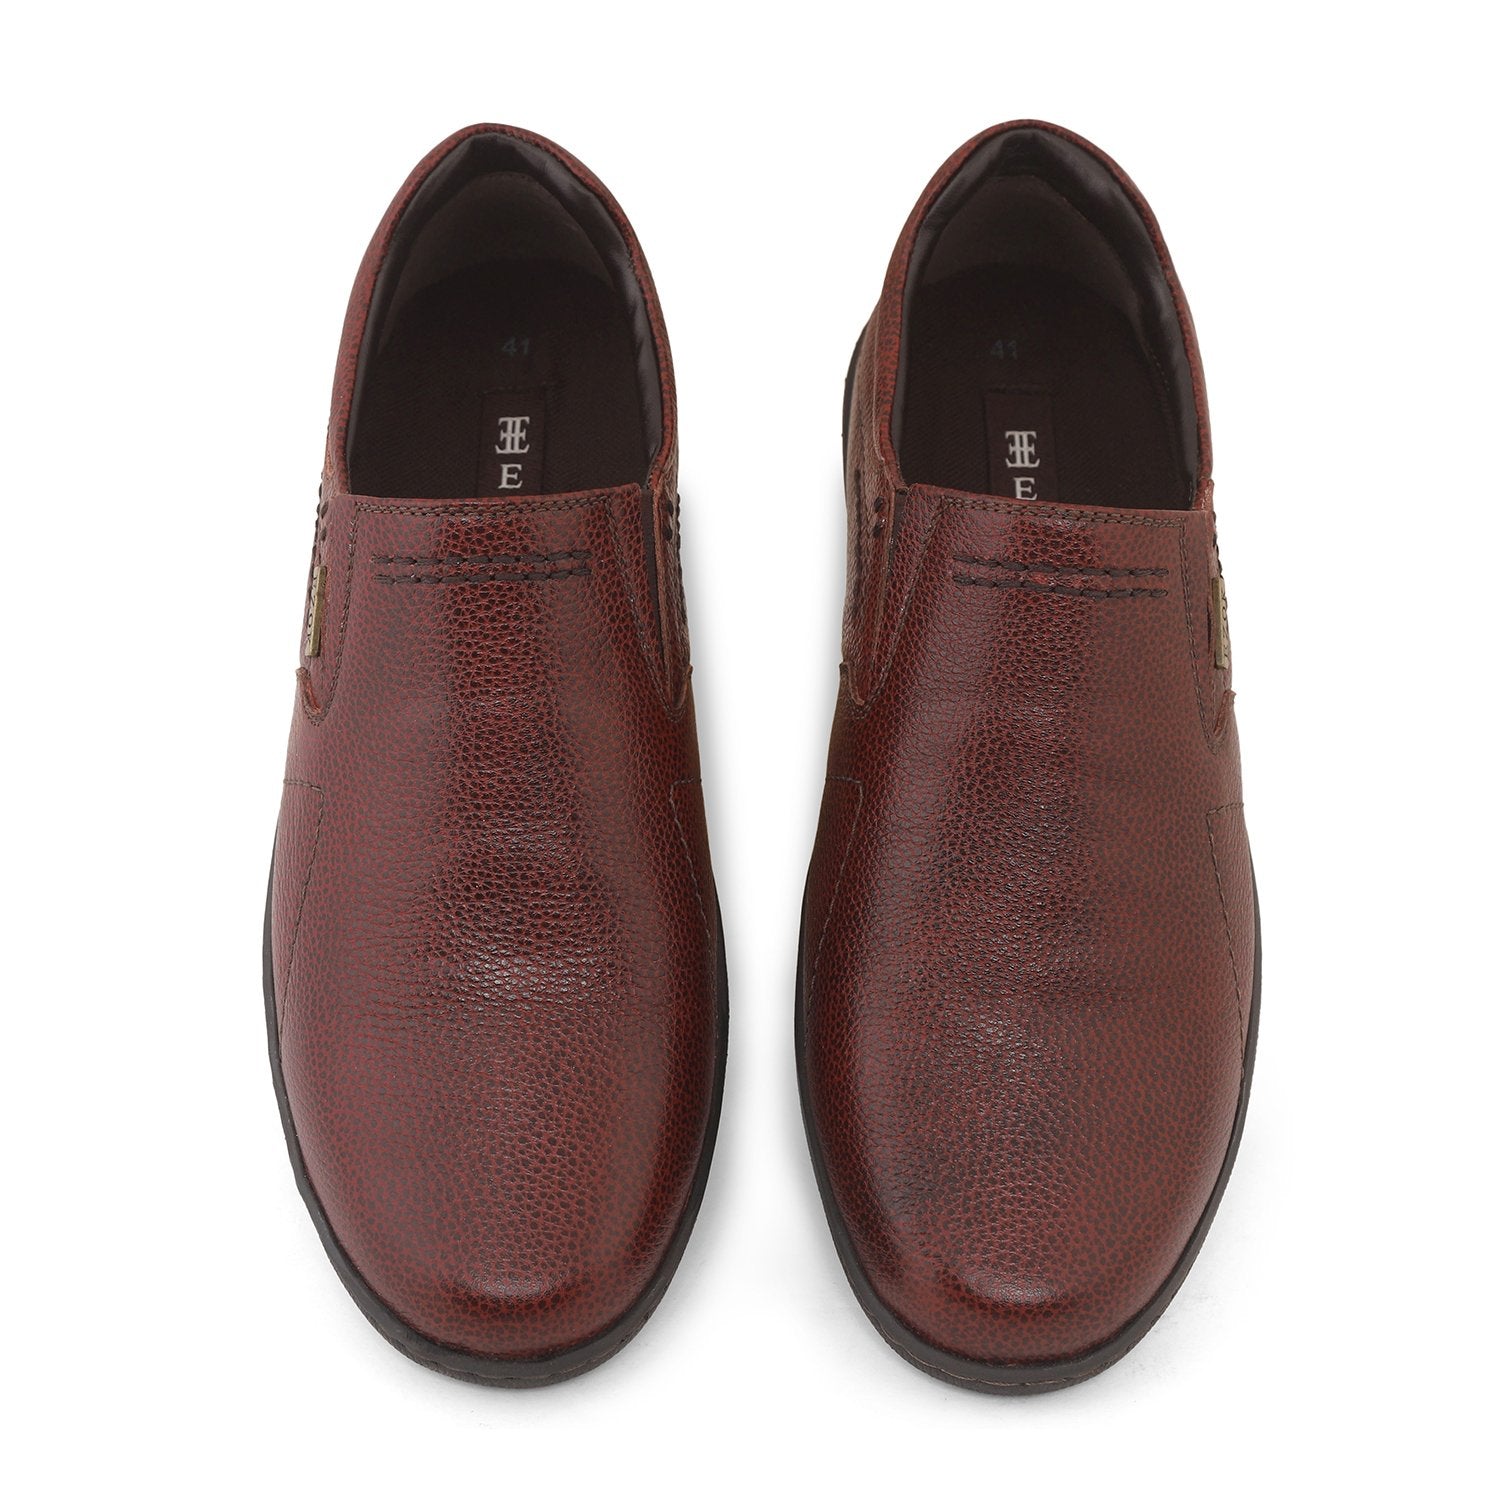 Ezok Brown Leather Slipon Loafers